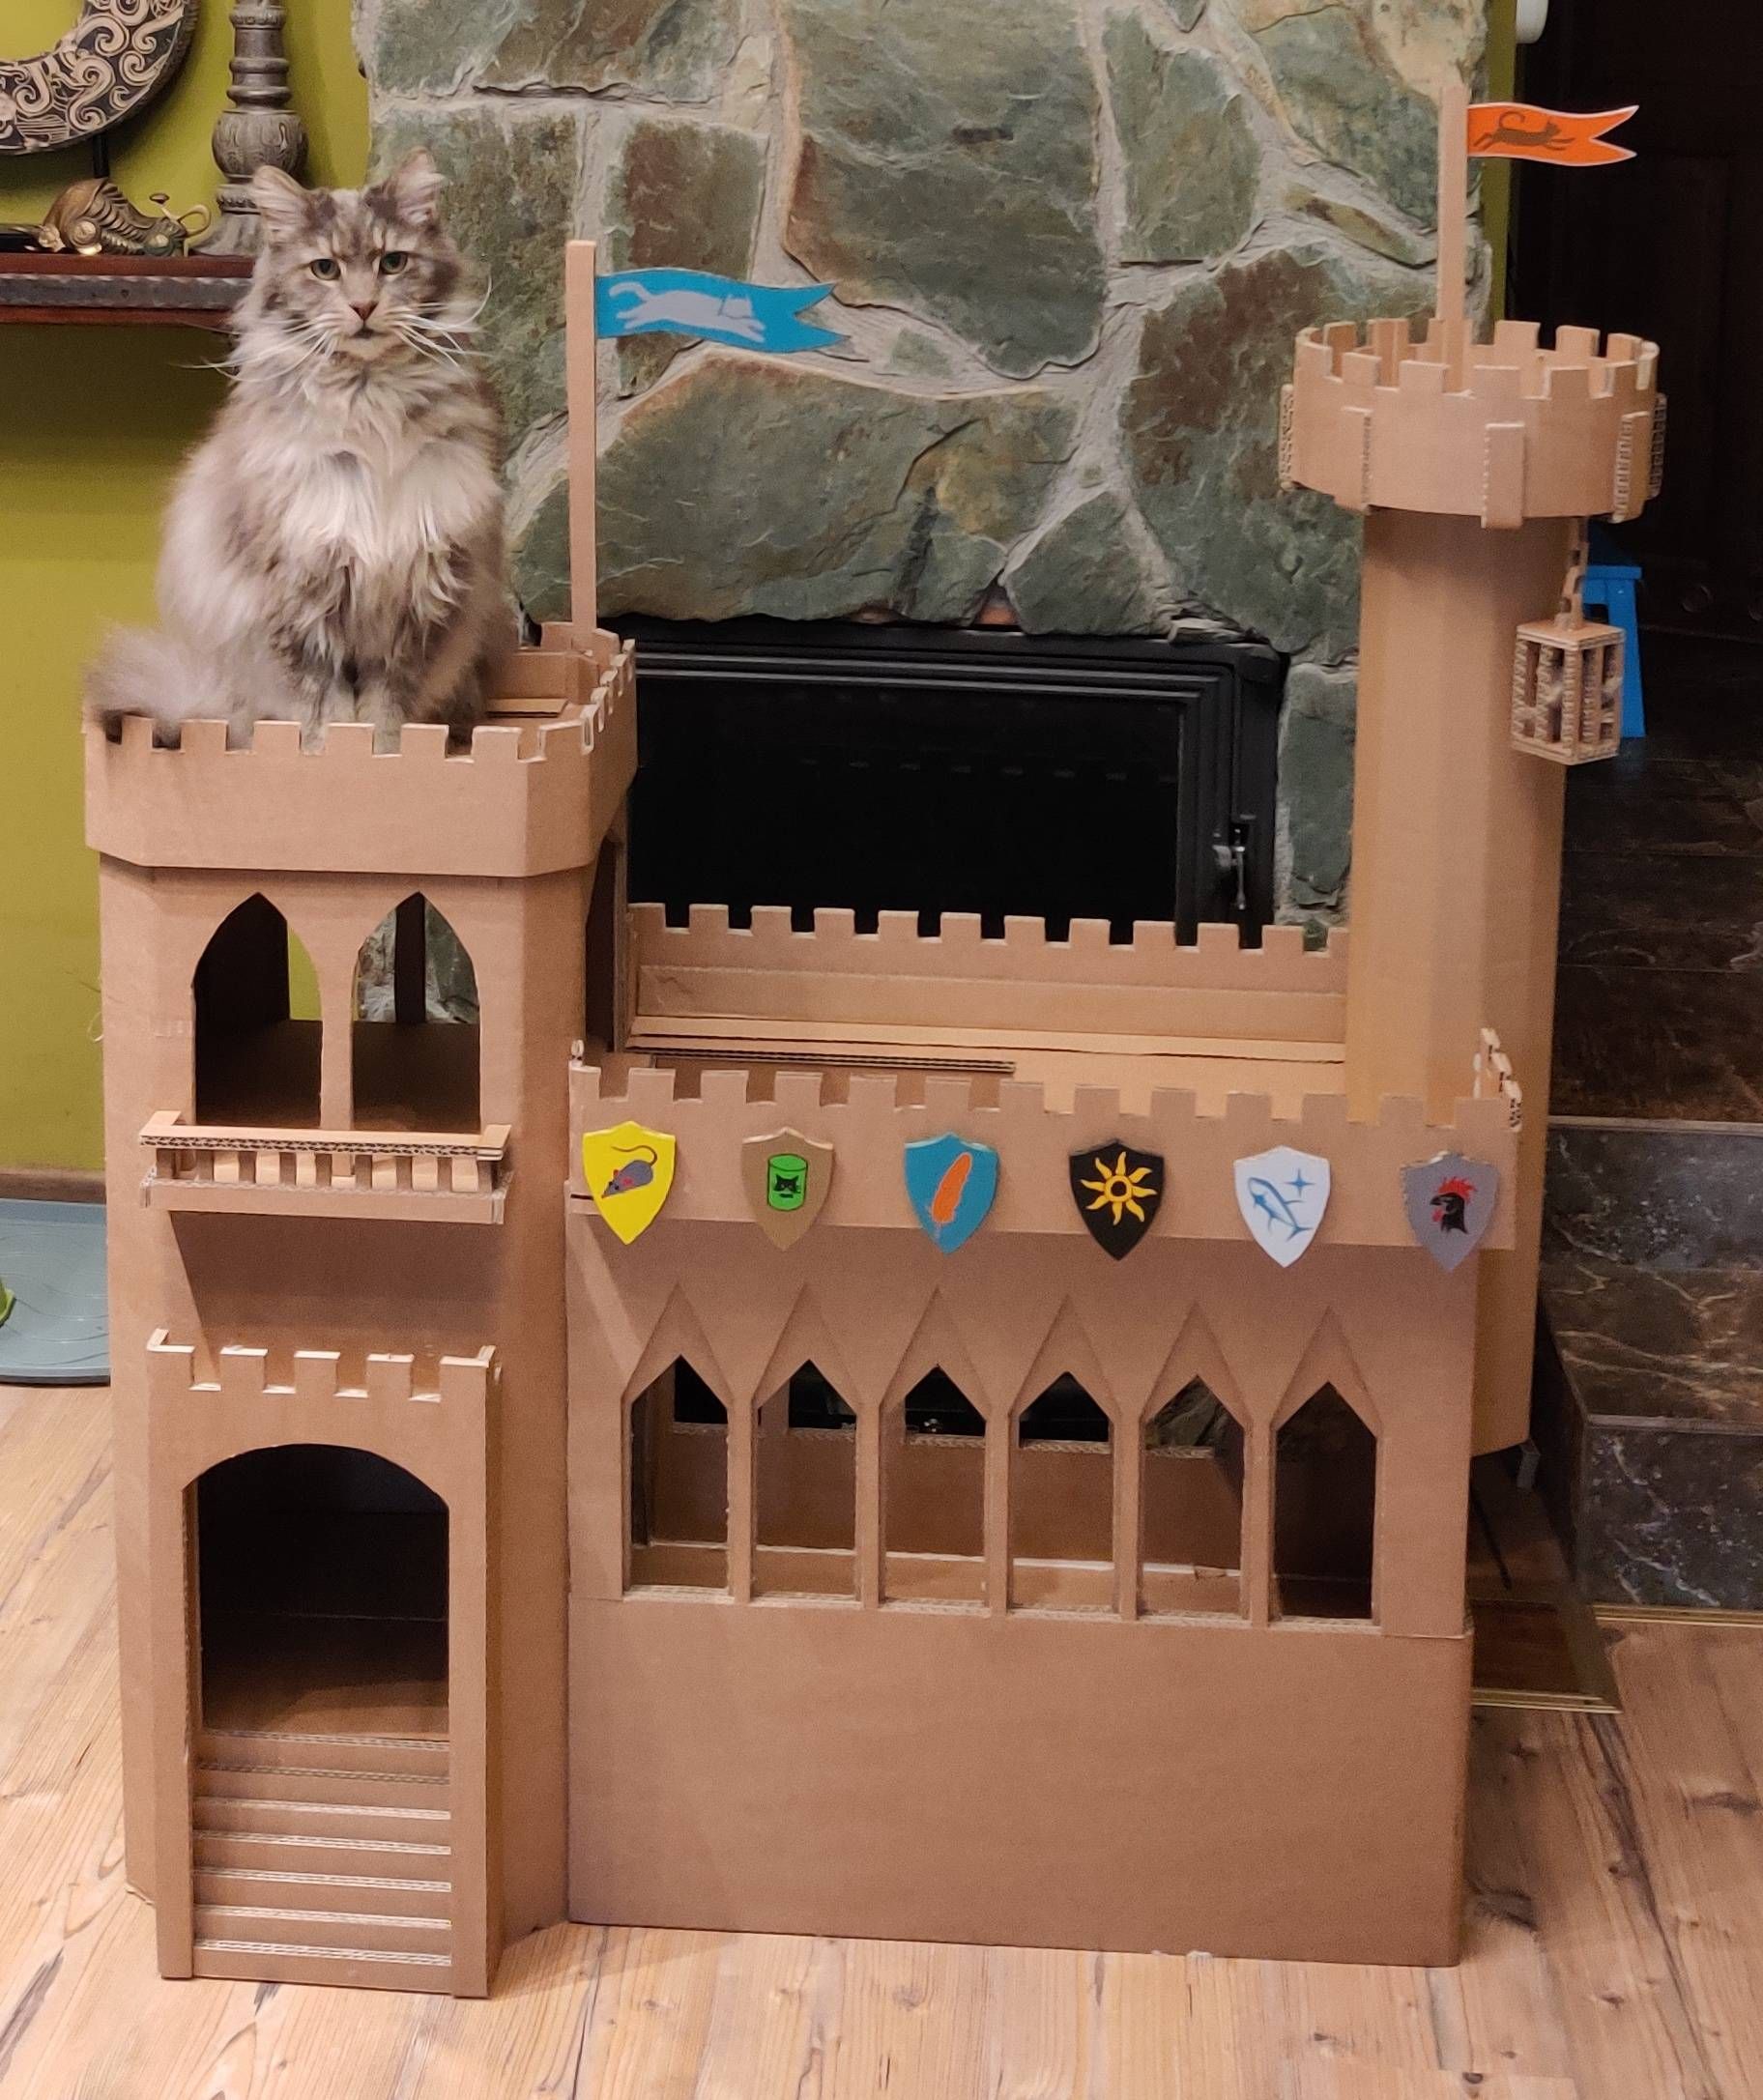 Lockdown + cats + cardboard =